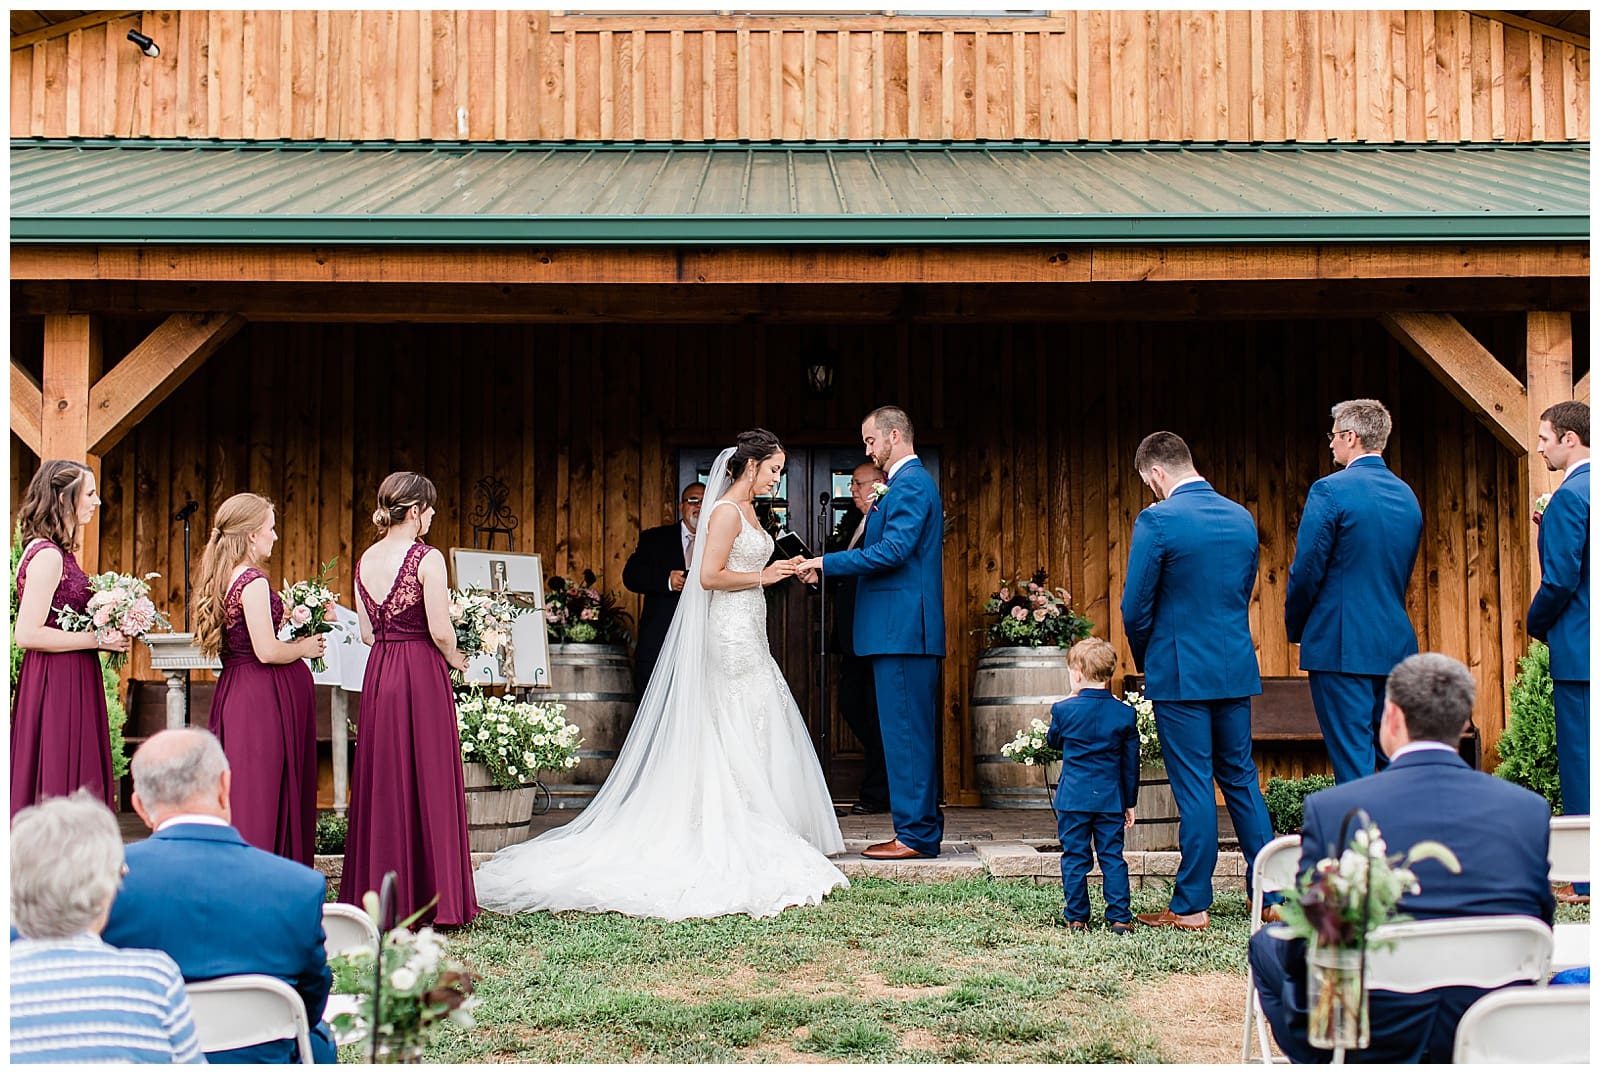 Danielle-Defayette-Photography-Middle-Fork-Barn-Wedding-VA-2020_0061.jpg